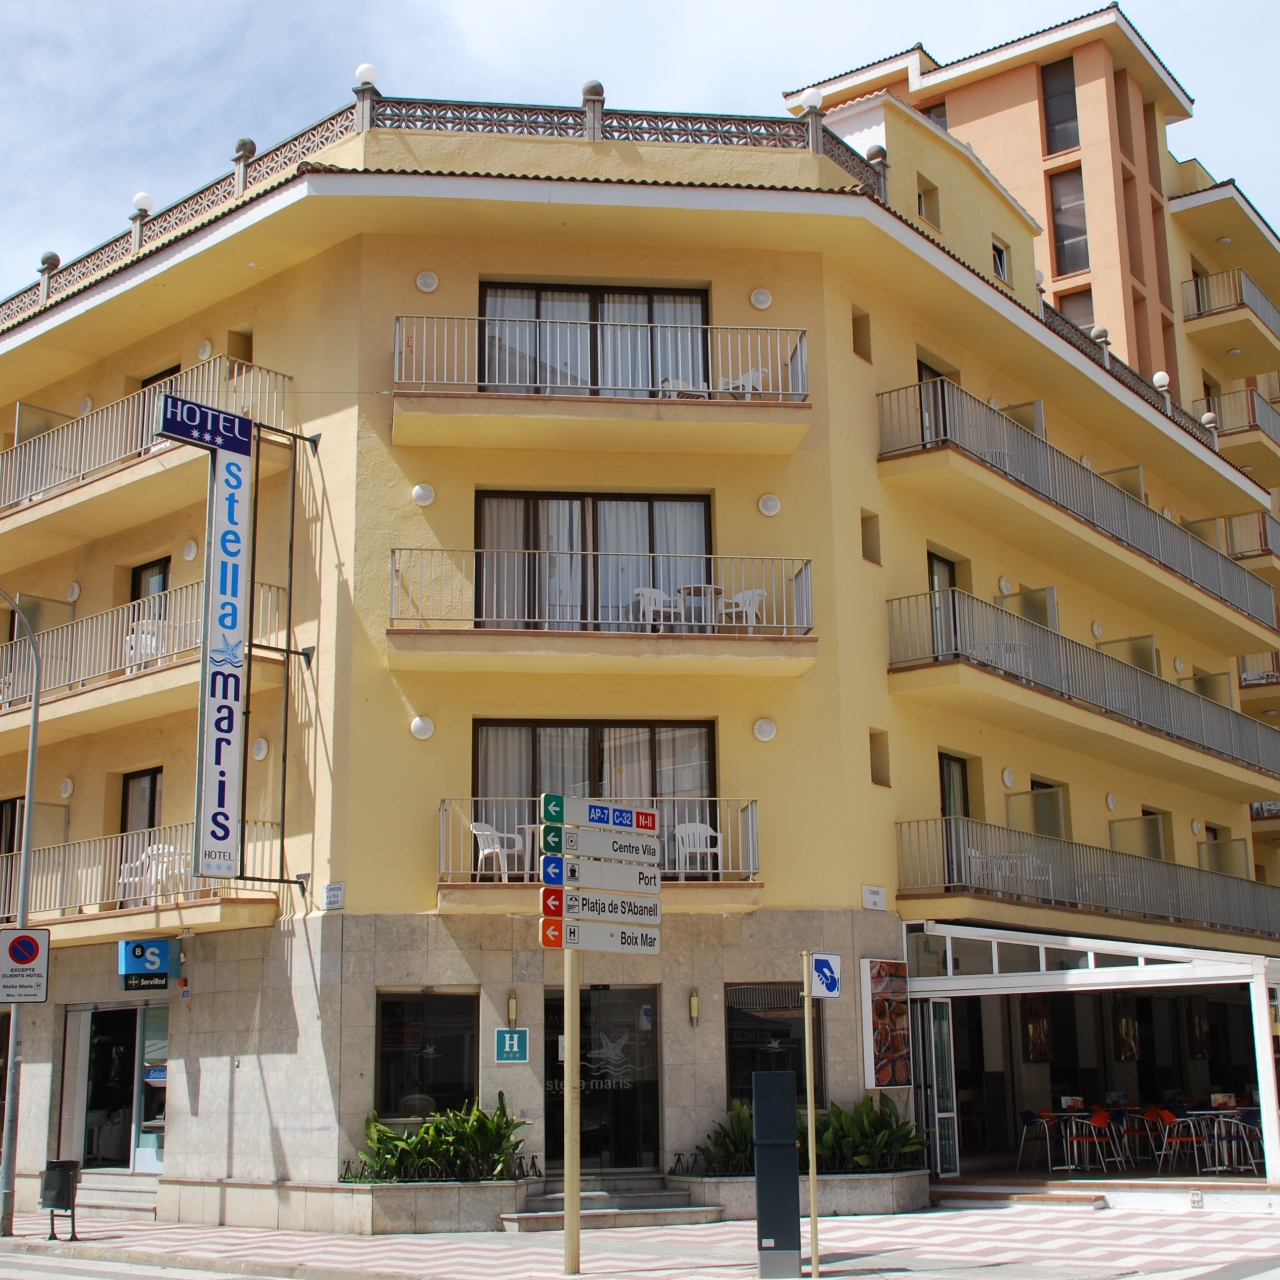 Hotel Stella Maris - 3 HRS star hotel in Blanes (Catalonia)